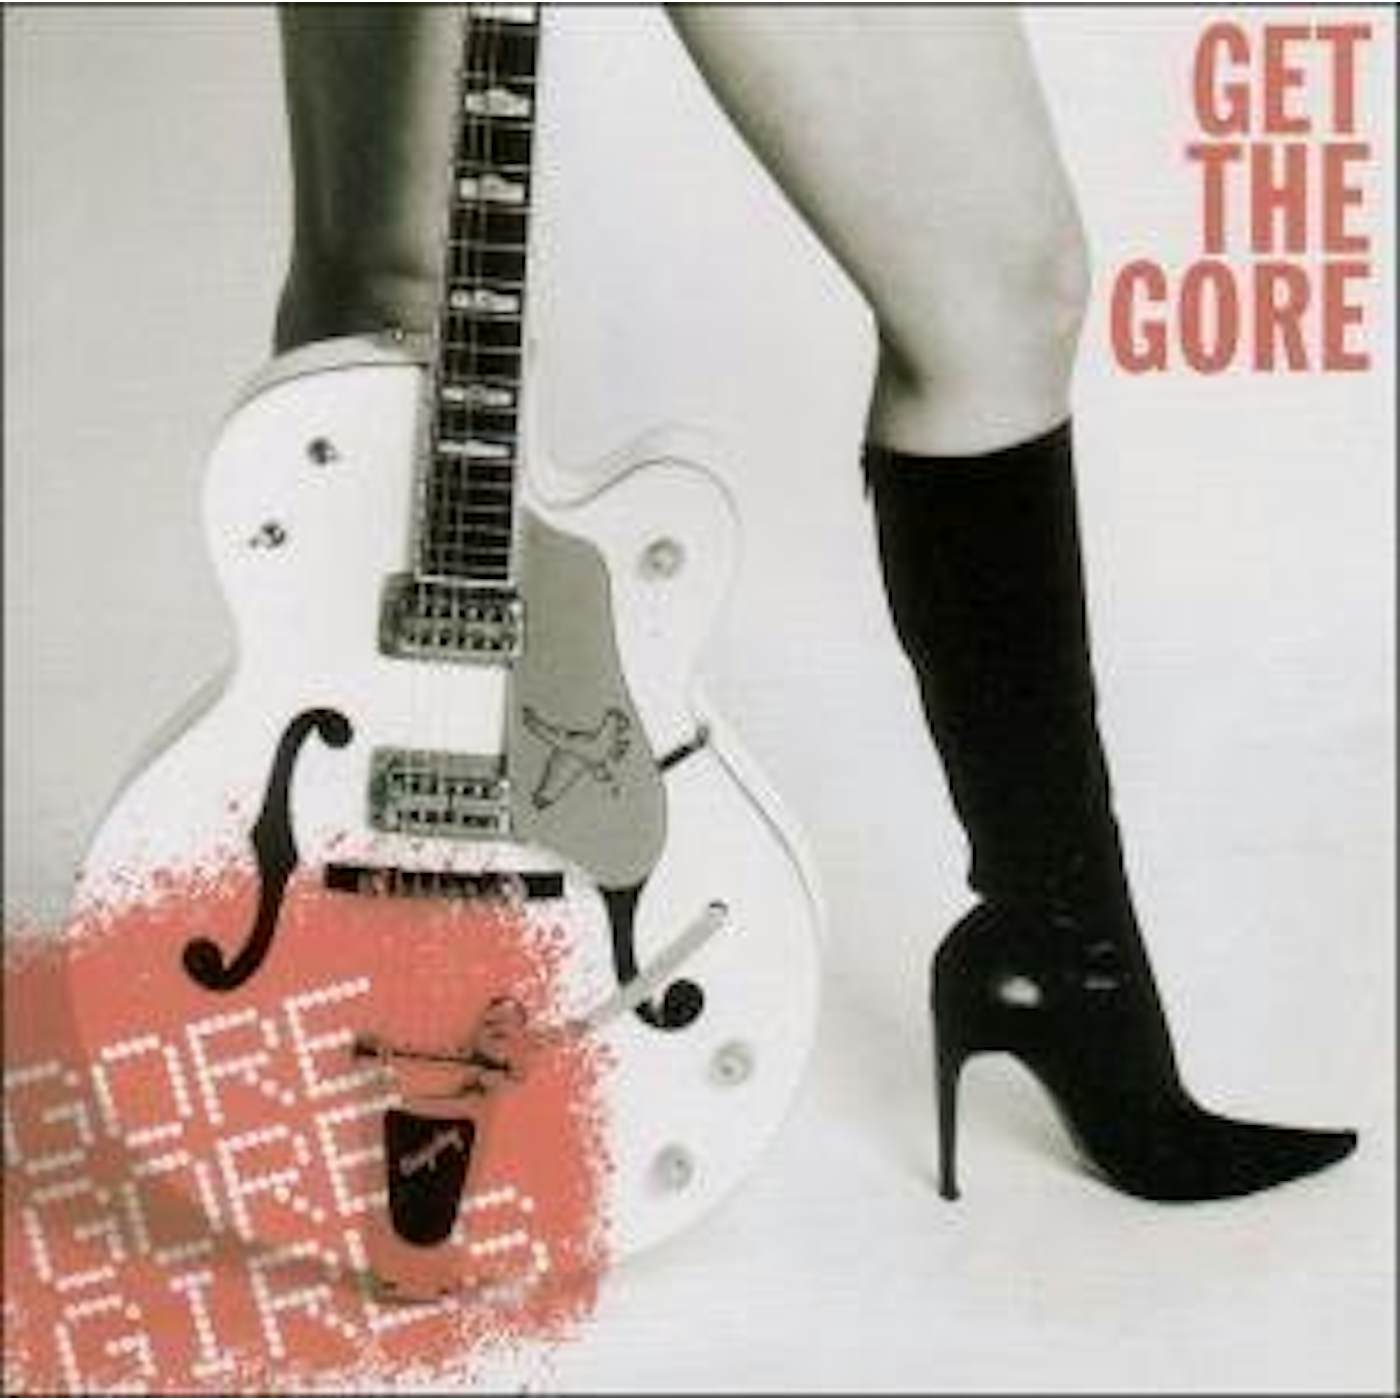 Gore Gore Girls GET THE GORE CD